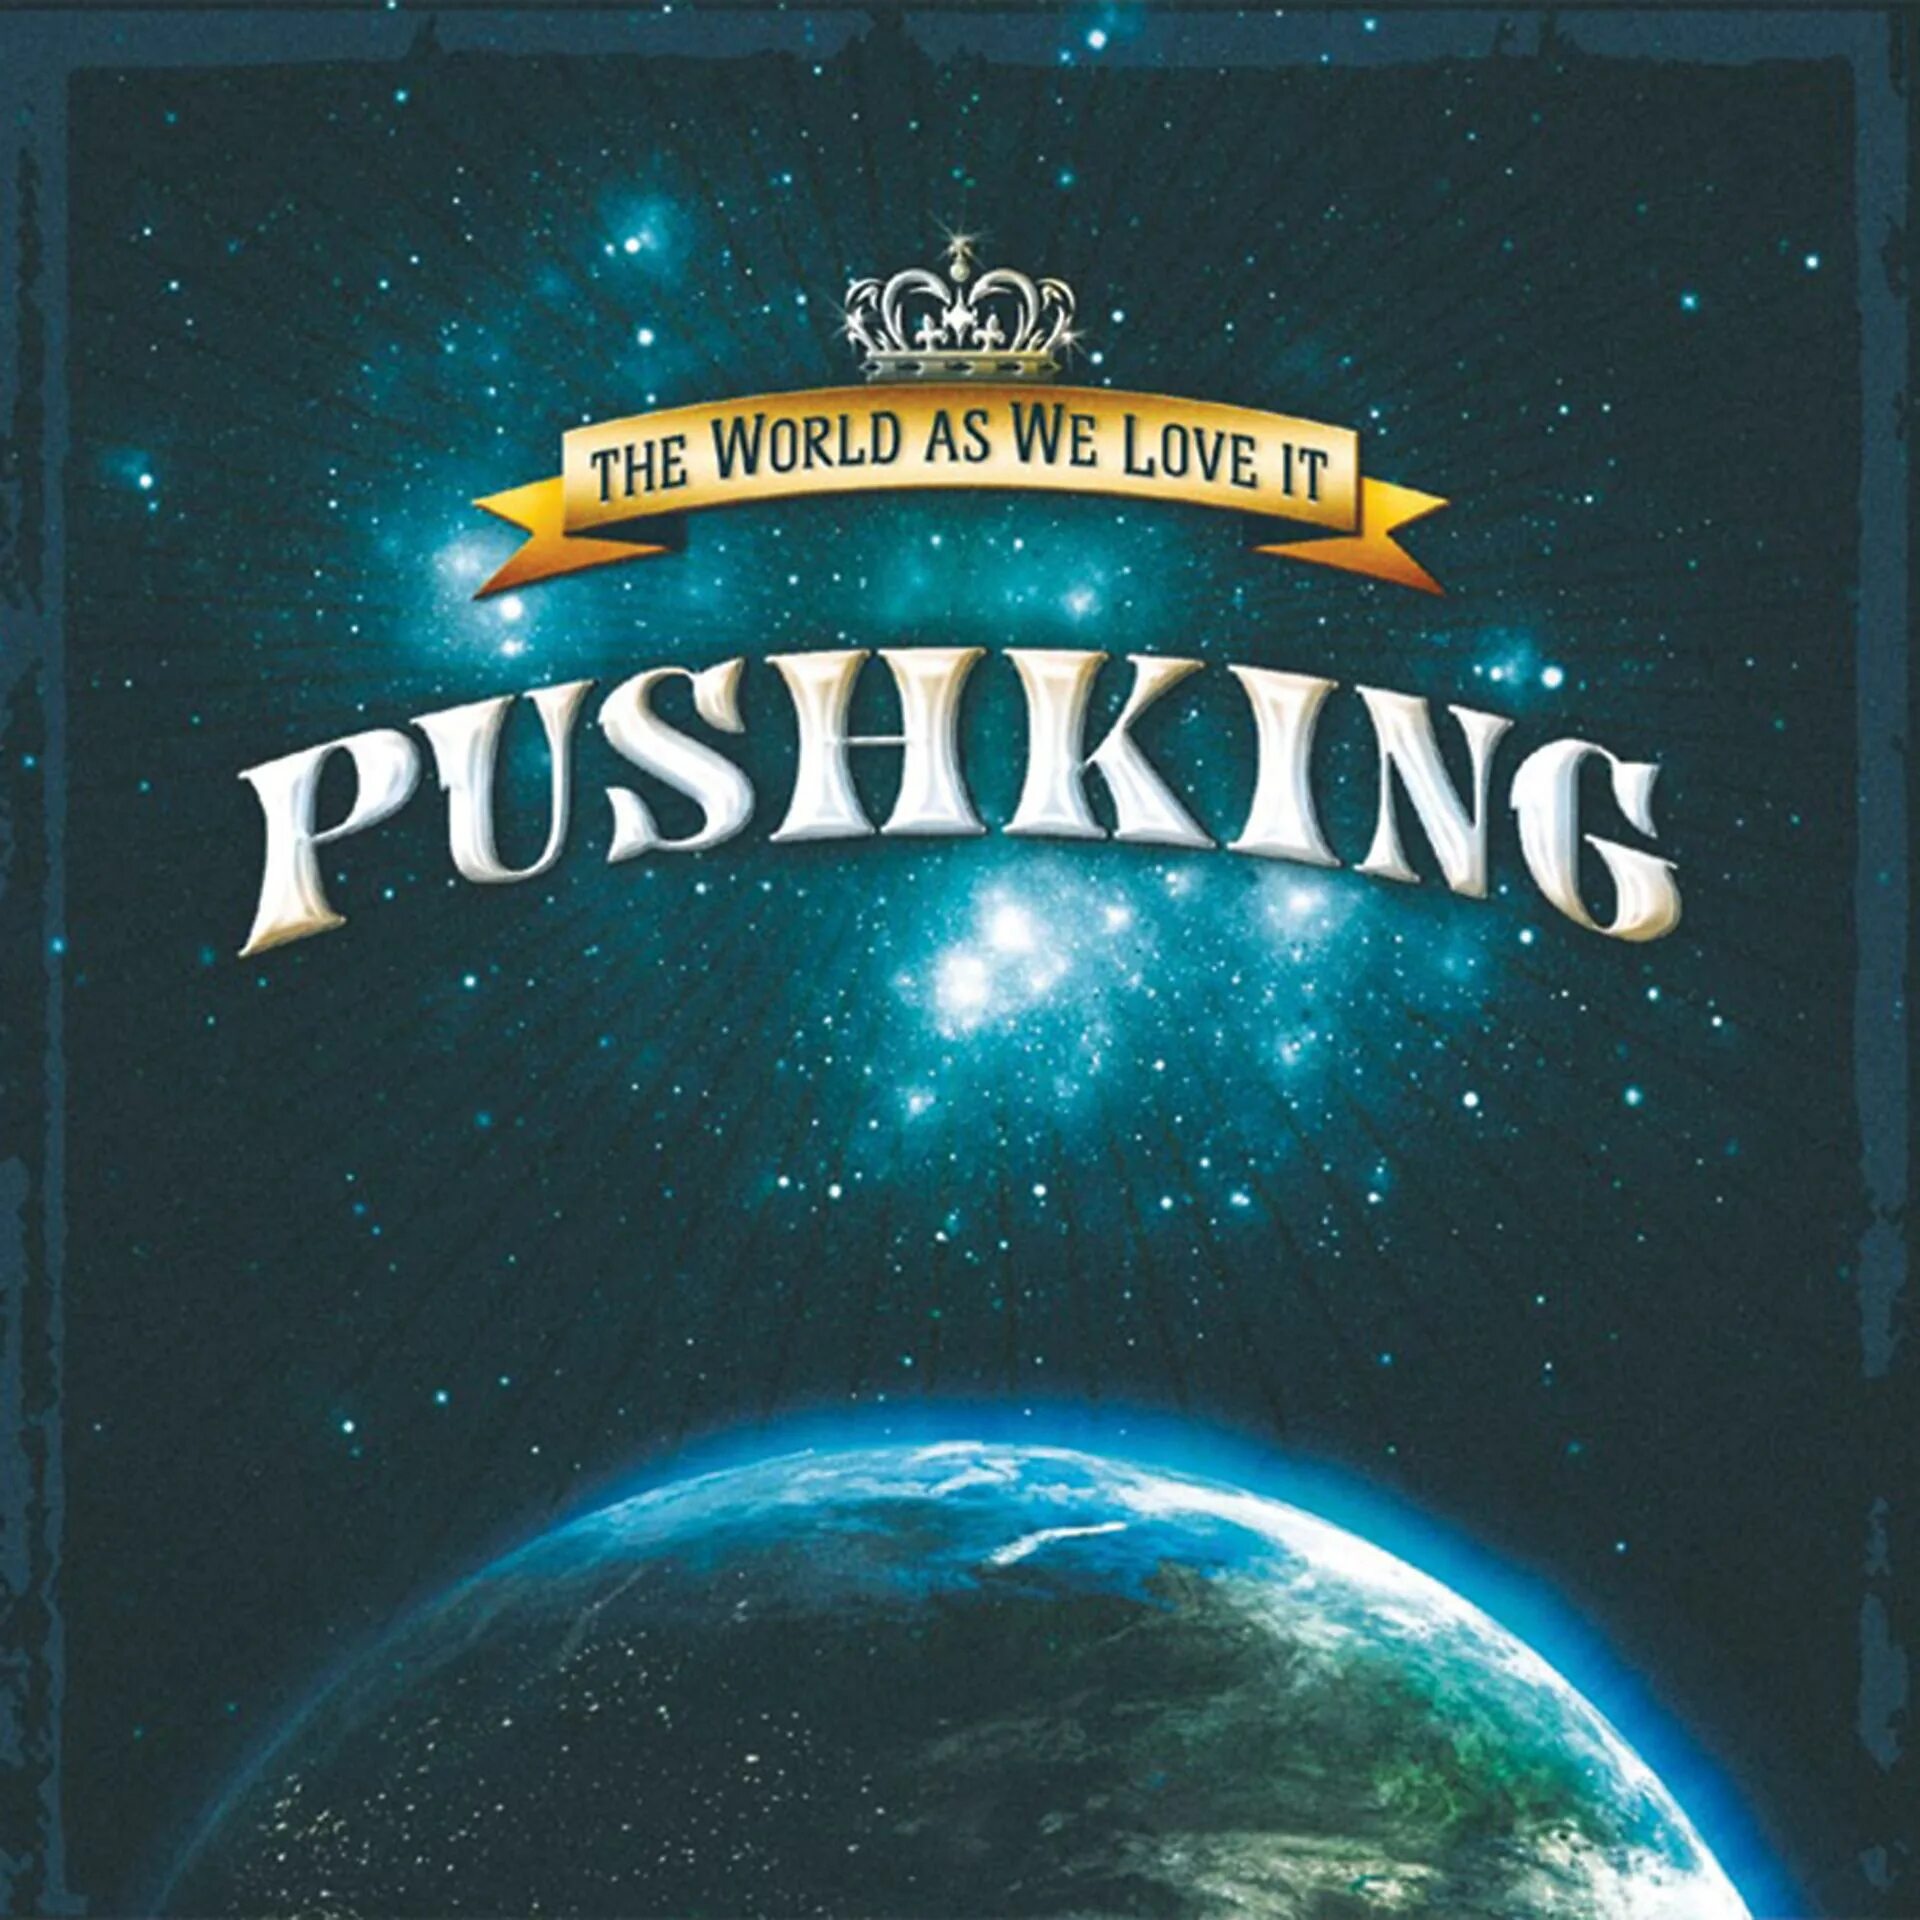 We love world. Pushking группа Tonight. Pushking_the World as we Love it_2011. Пушкинг группа альбомы. Картинки Pushking.